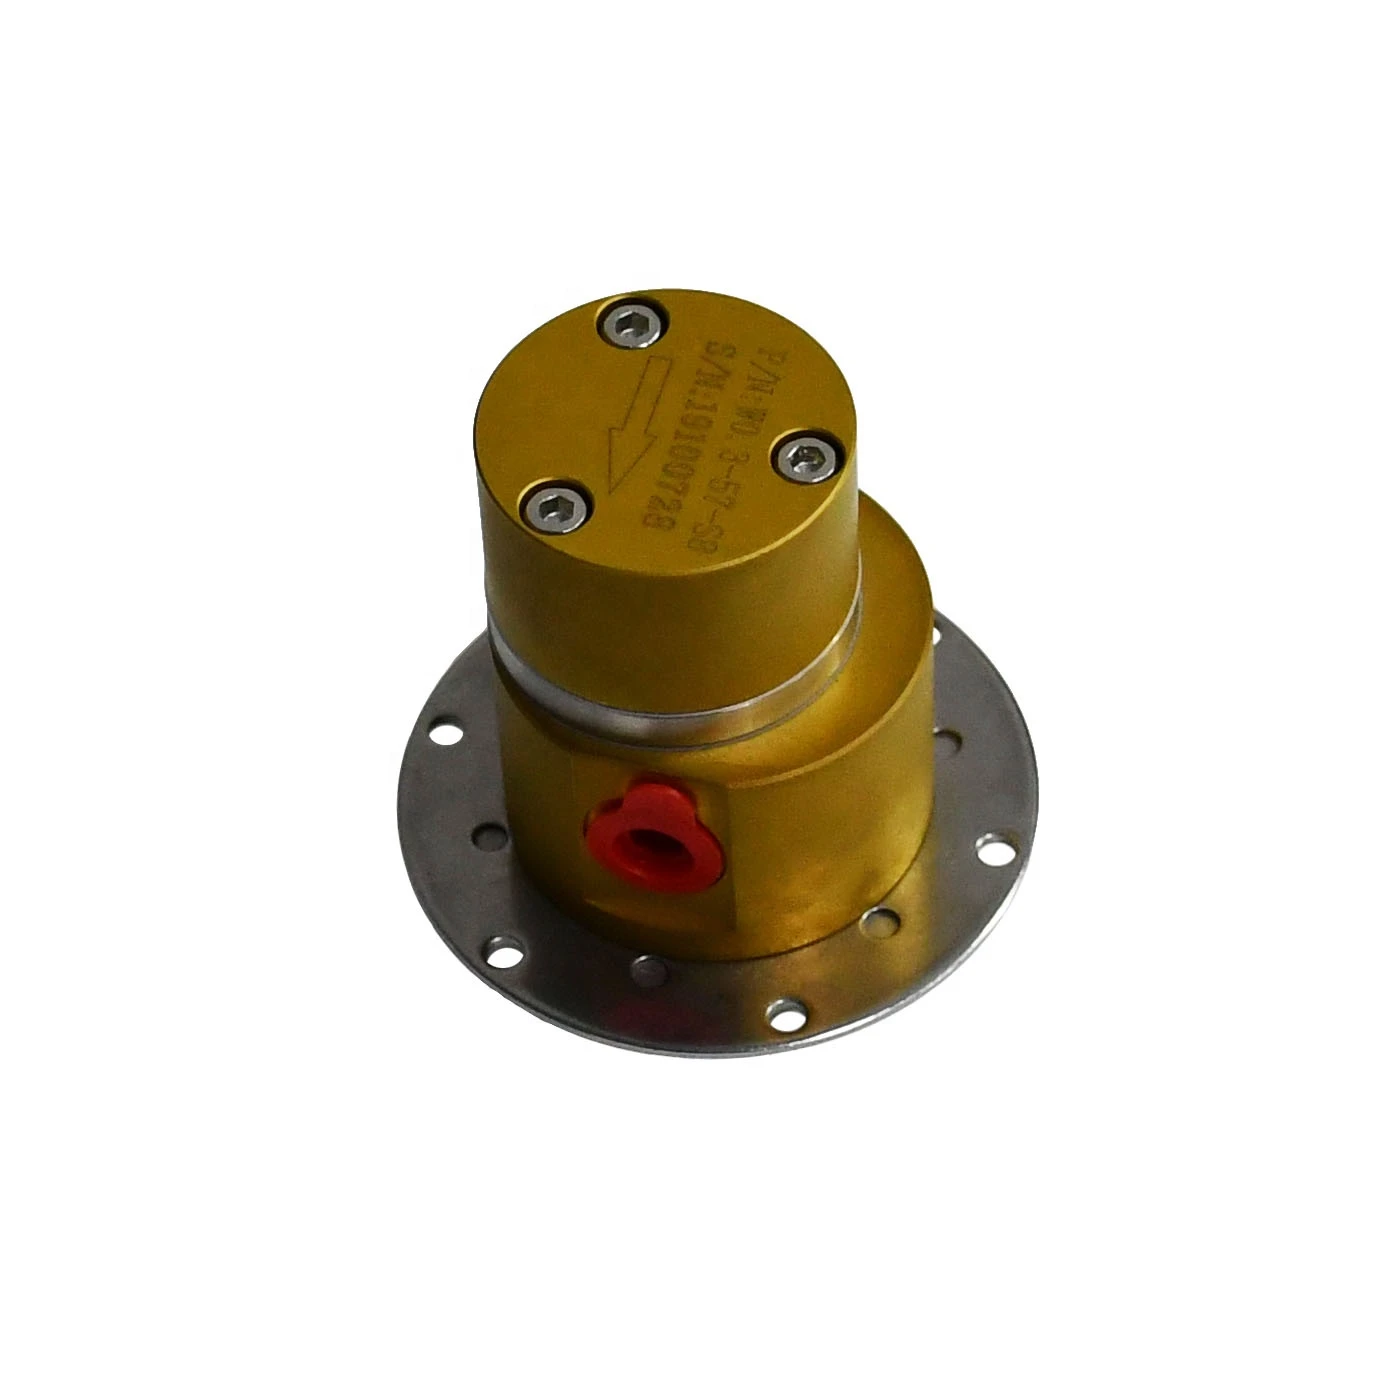 0.15ml/rev Titanium nitride coating micro magnetic drive gear pump head M0.15T57